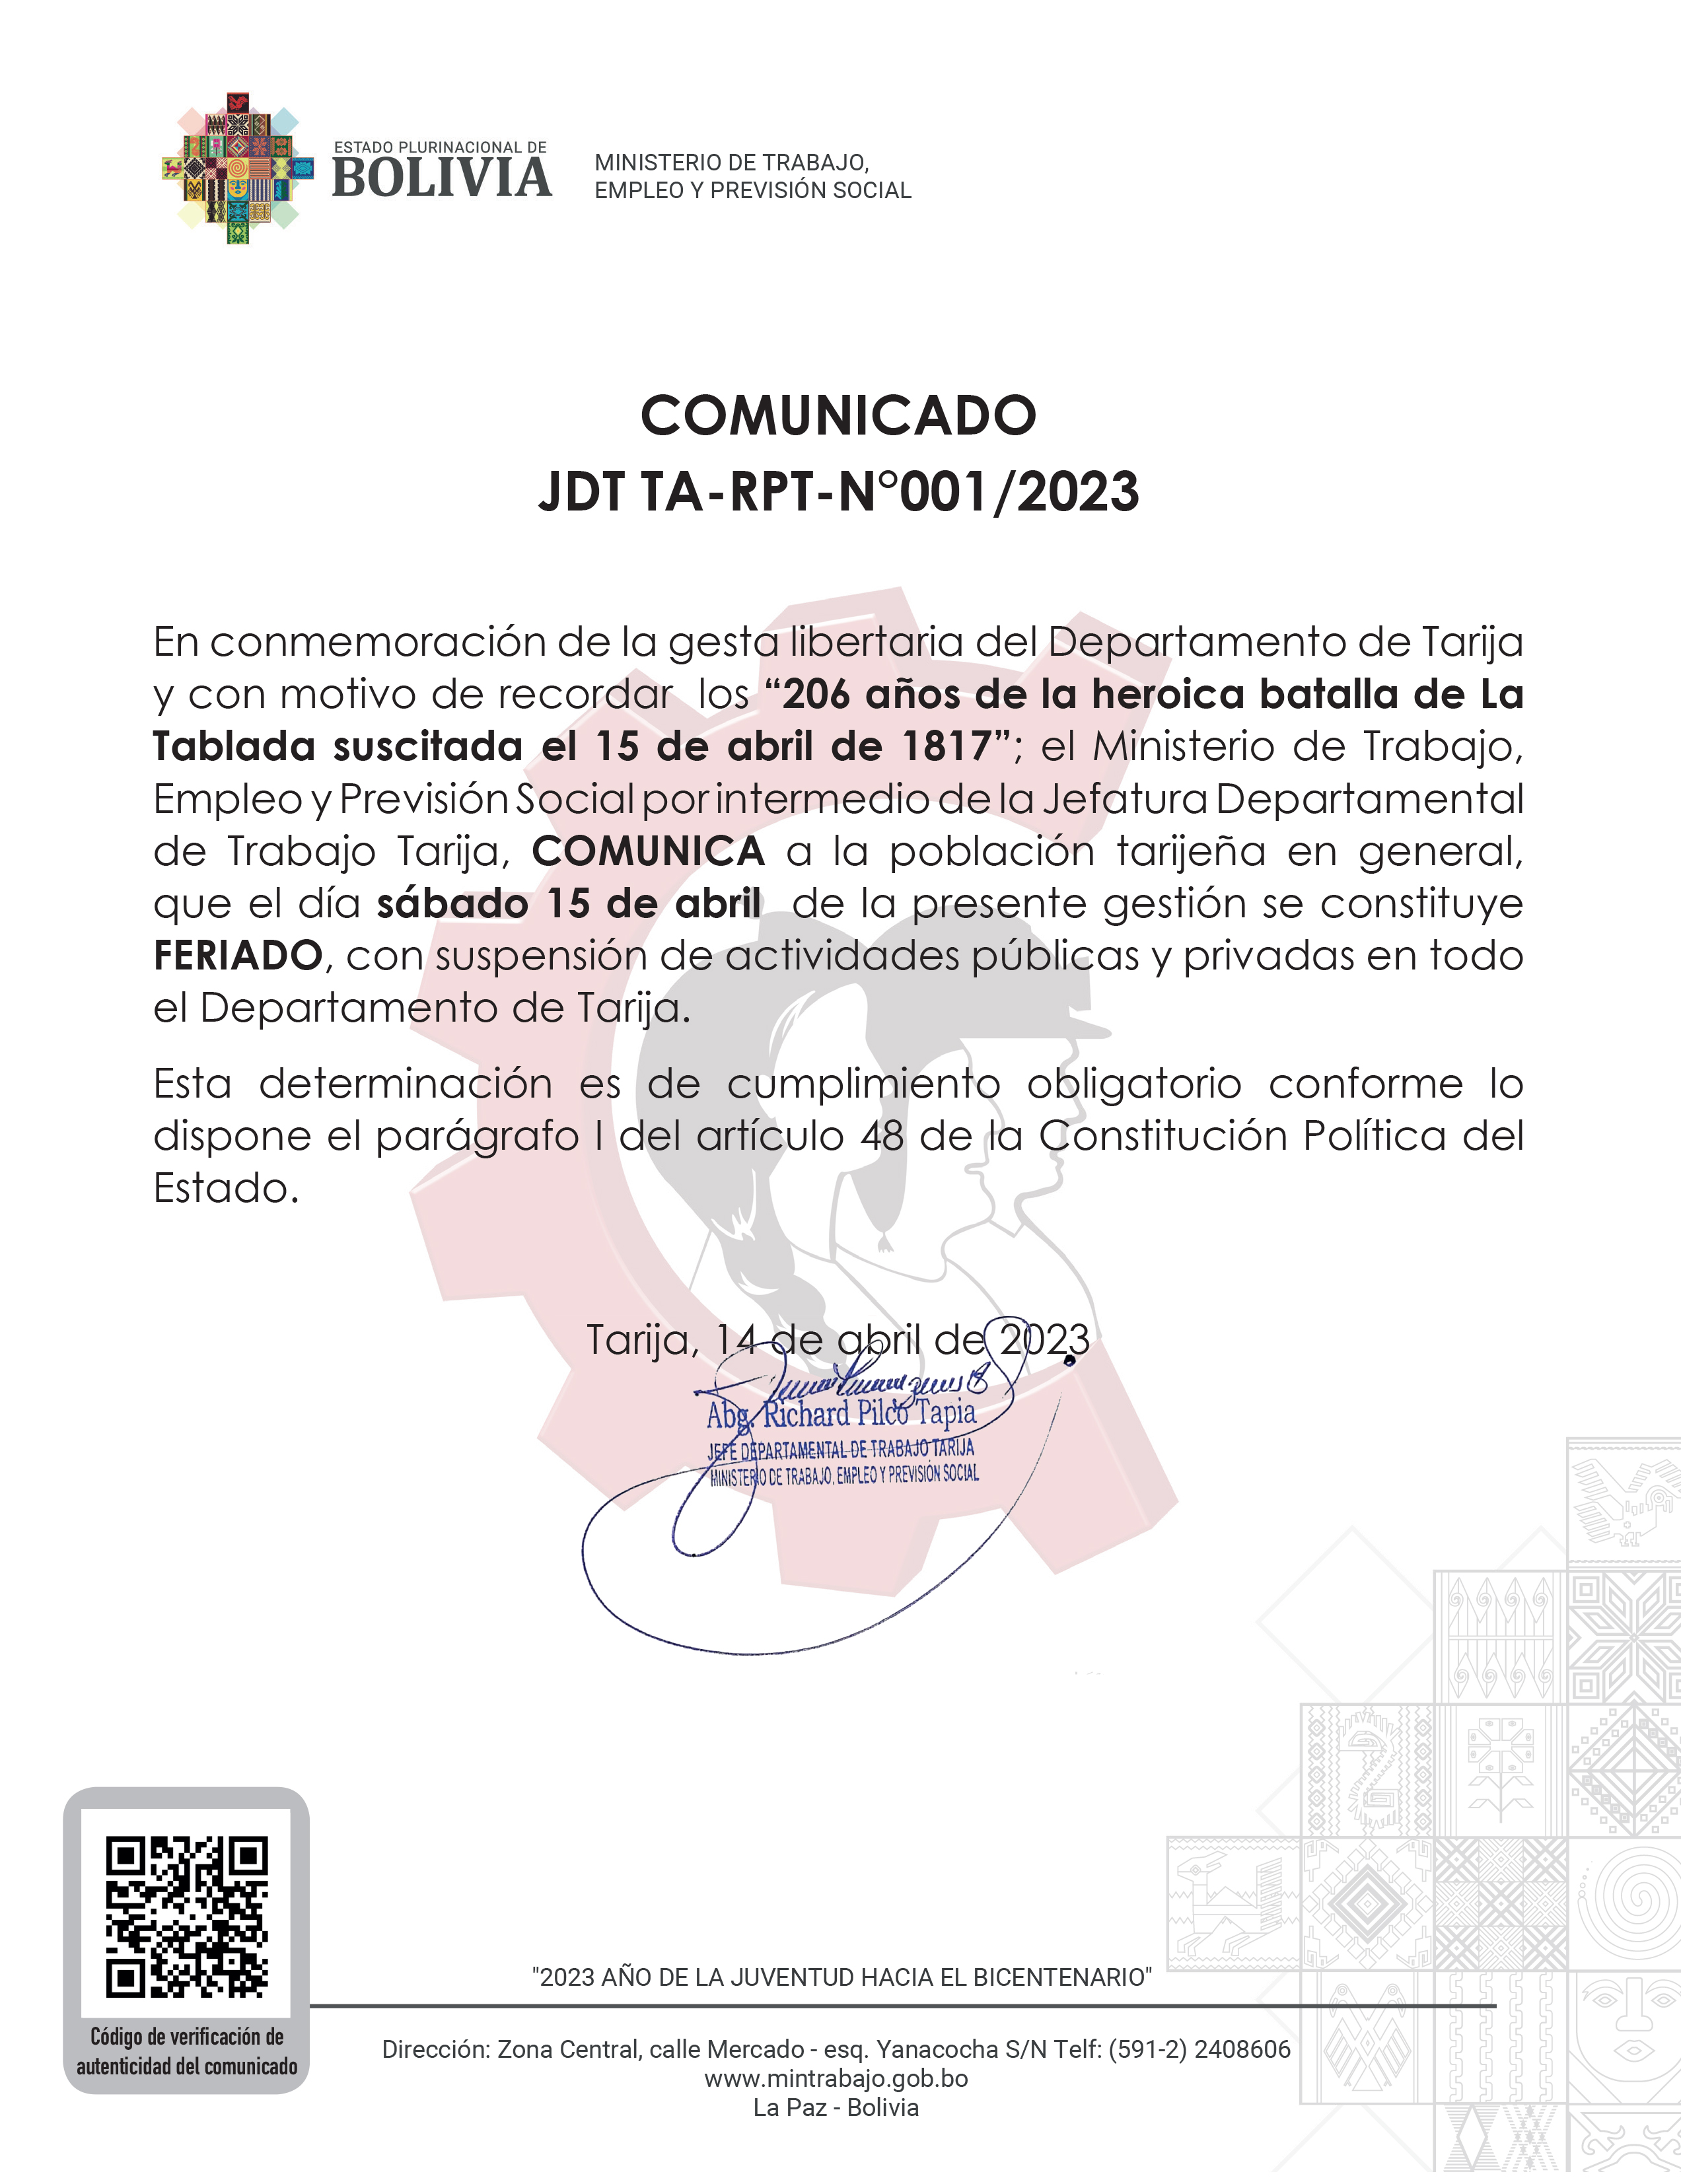 COMUNICADO JDT TA-RPT-N°001/2023